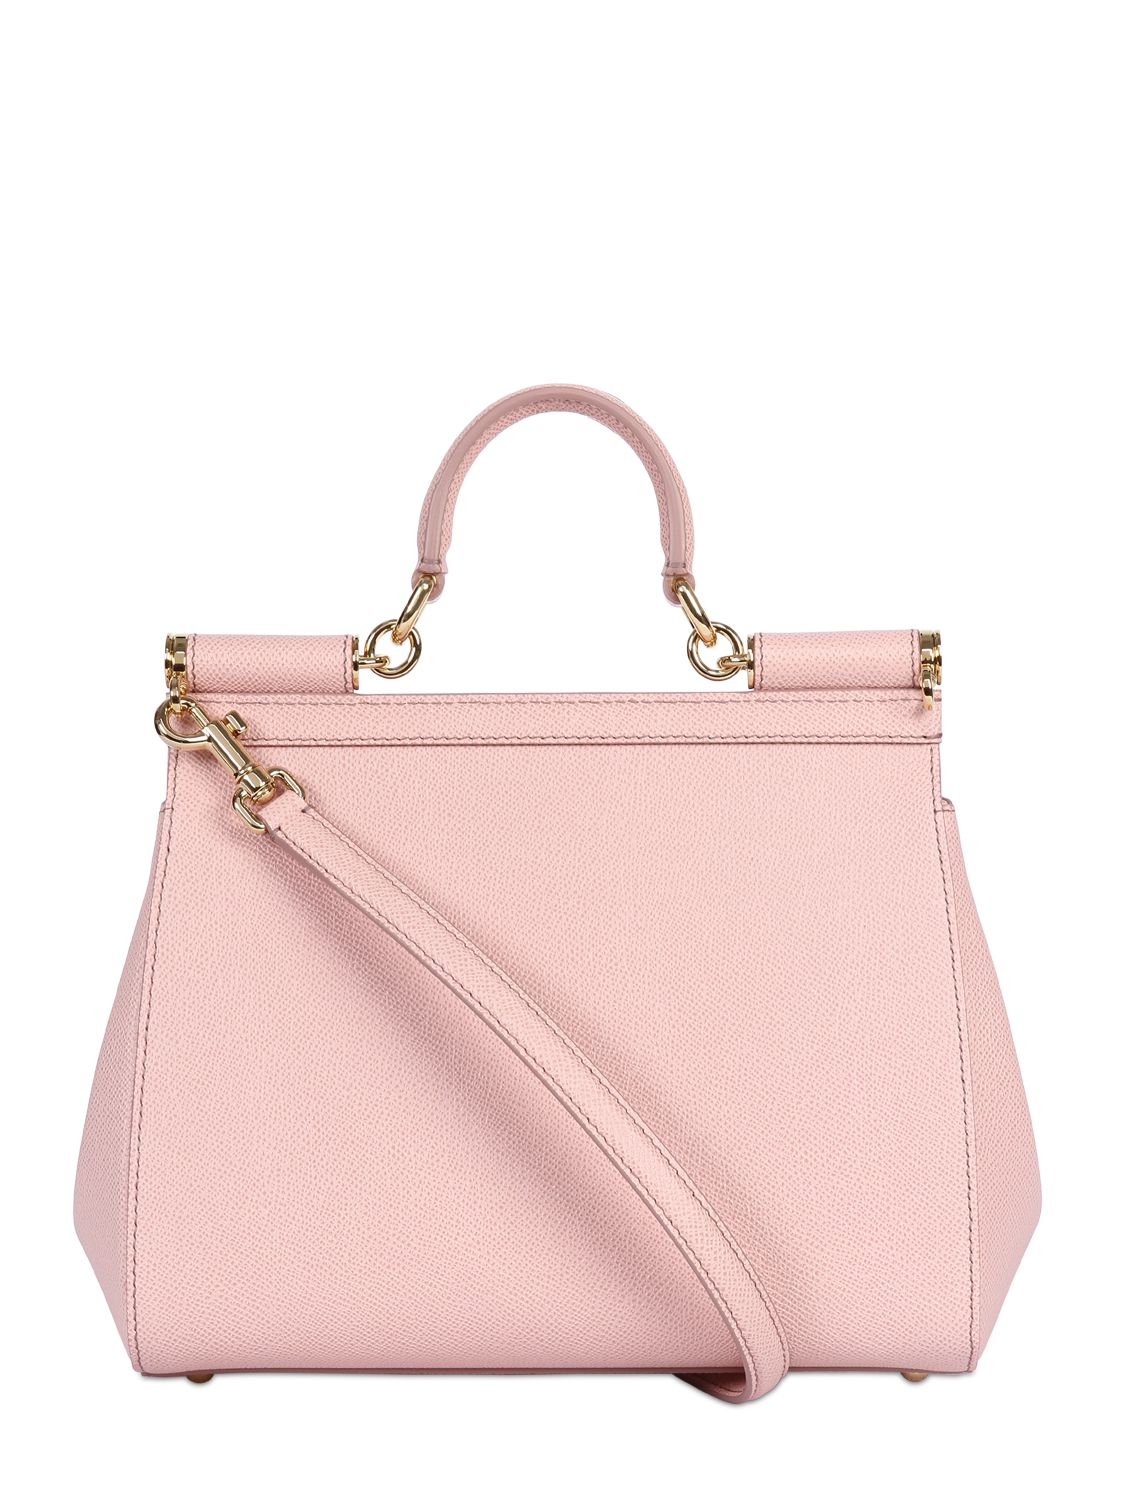 Lyst - Dolce & Gabbana Medium Sicily Dauphine Leather Bag in Pink